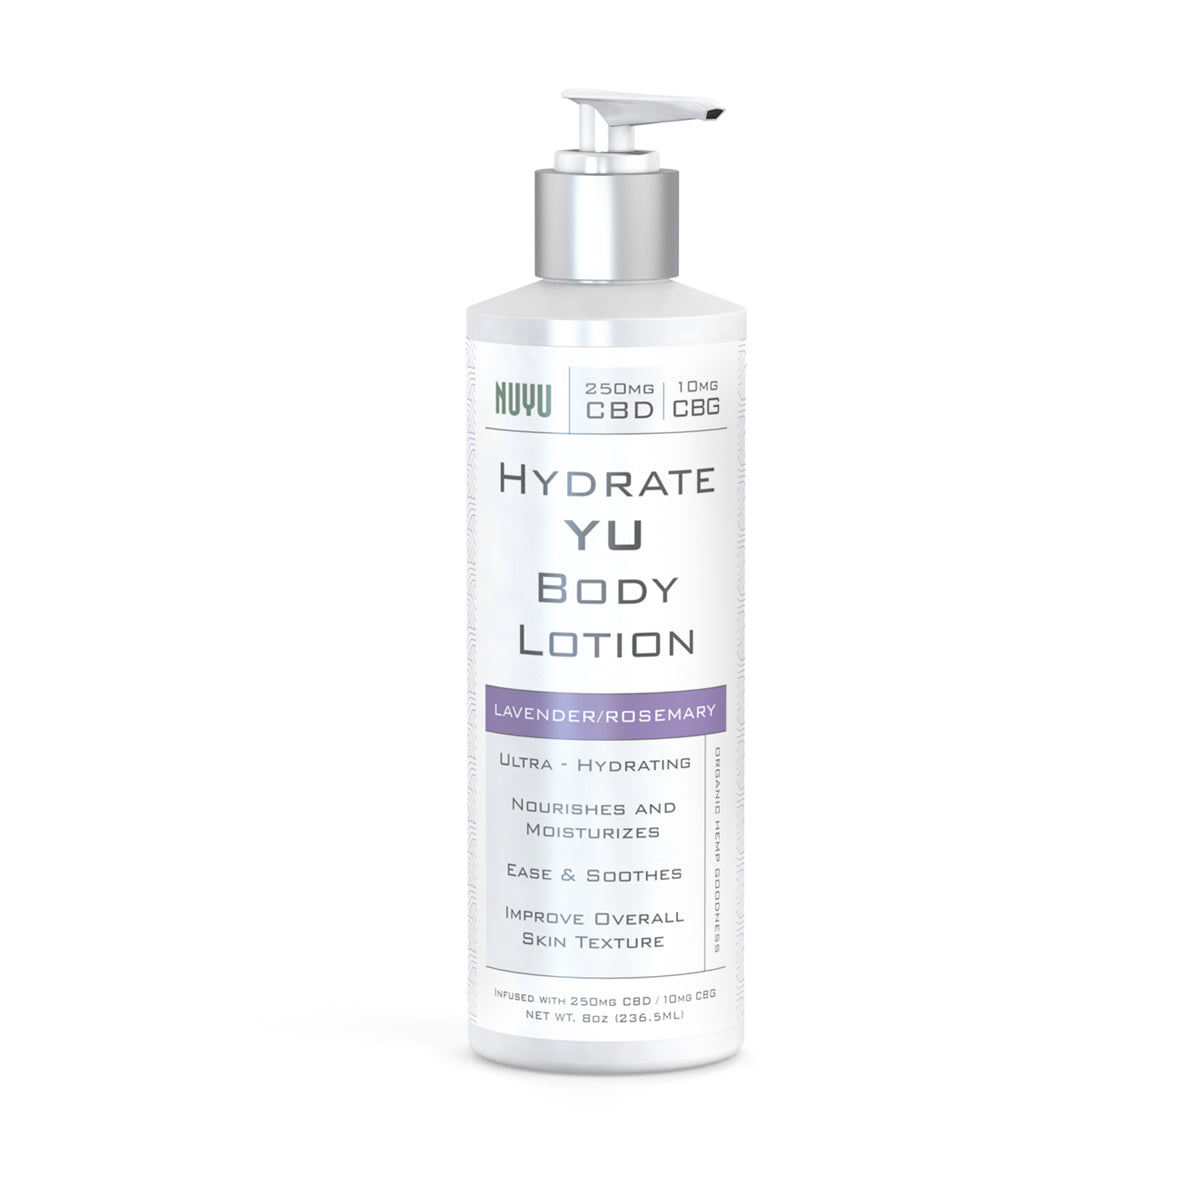 NUYU Hydrate YU Body Lotion - Lavender/Rosemary - 8oz | CBD: 250mg | CBG: 10mg